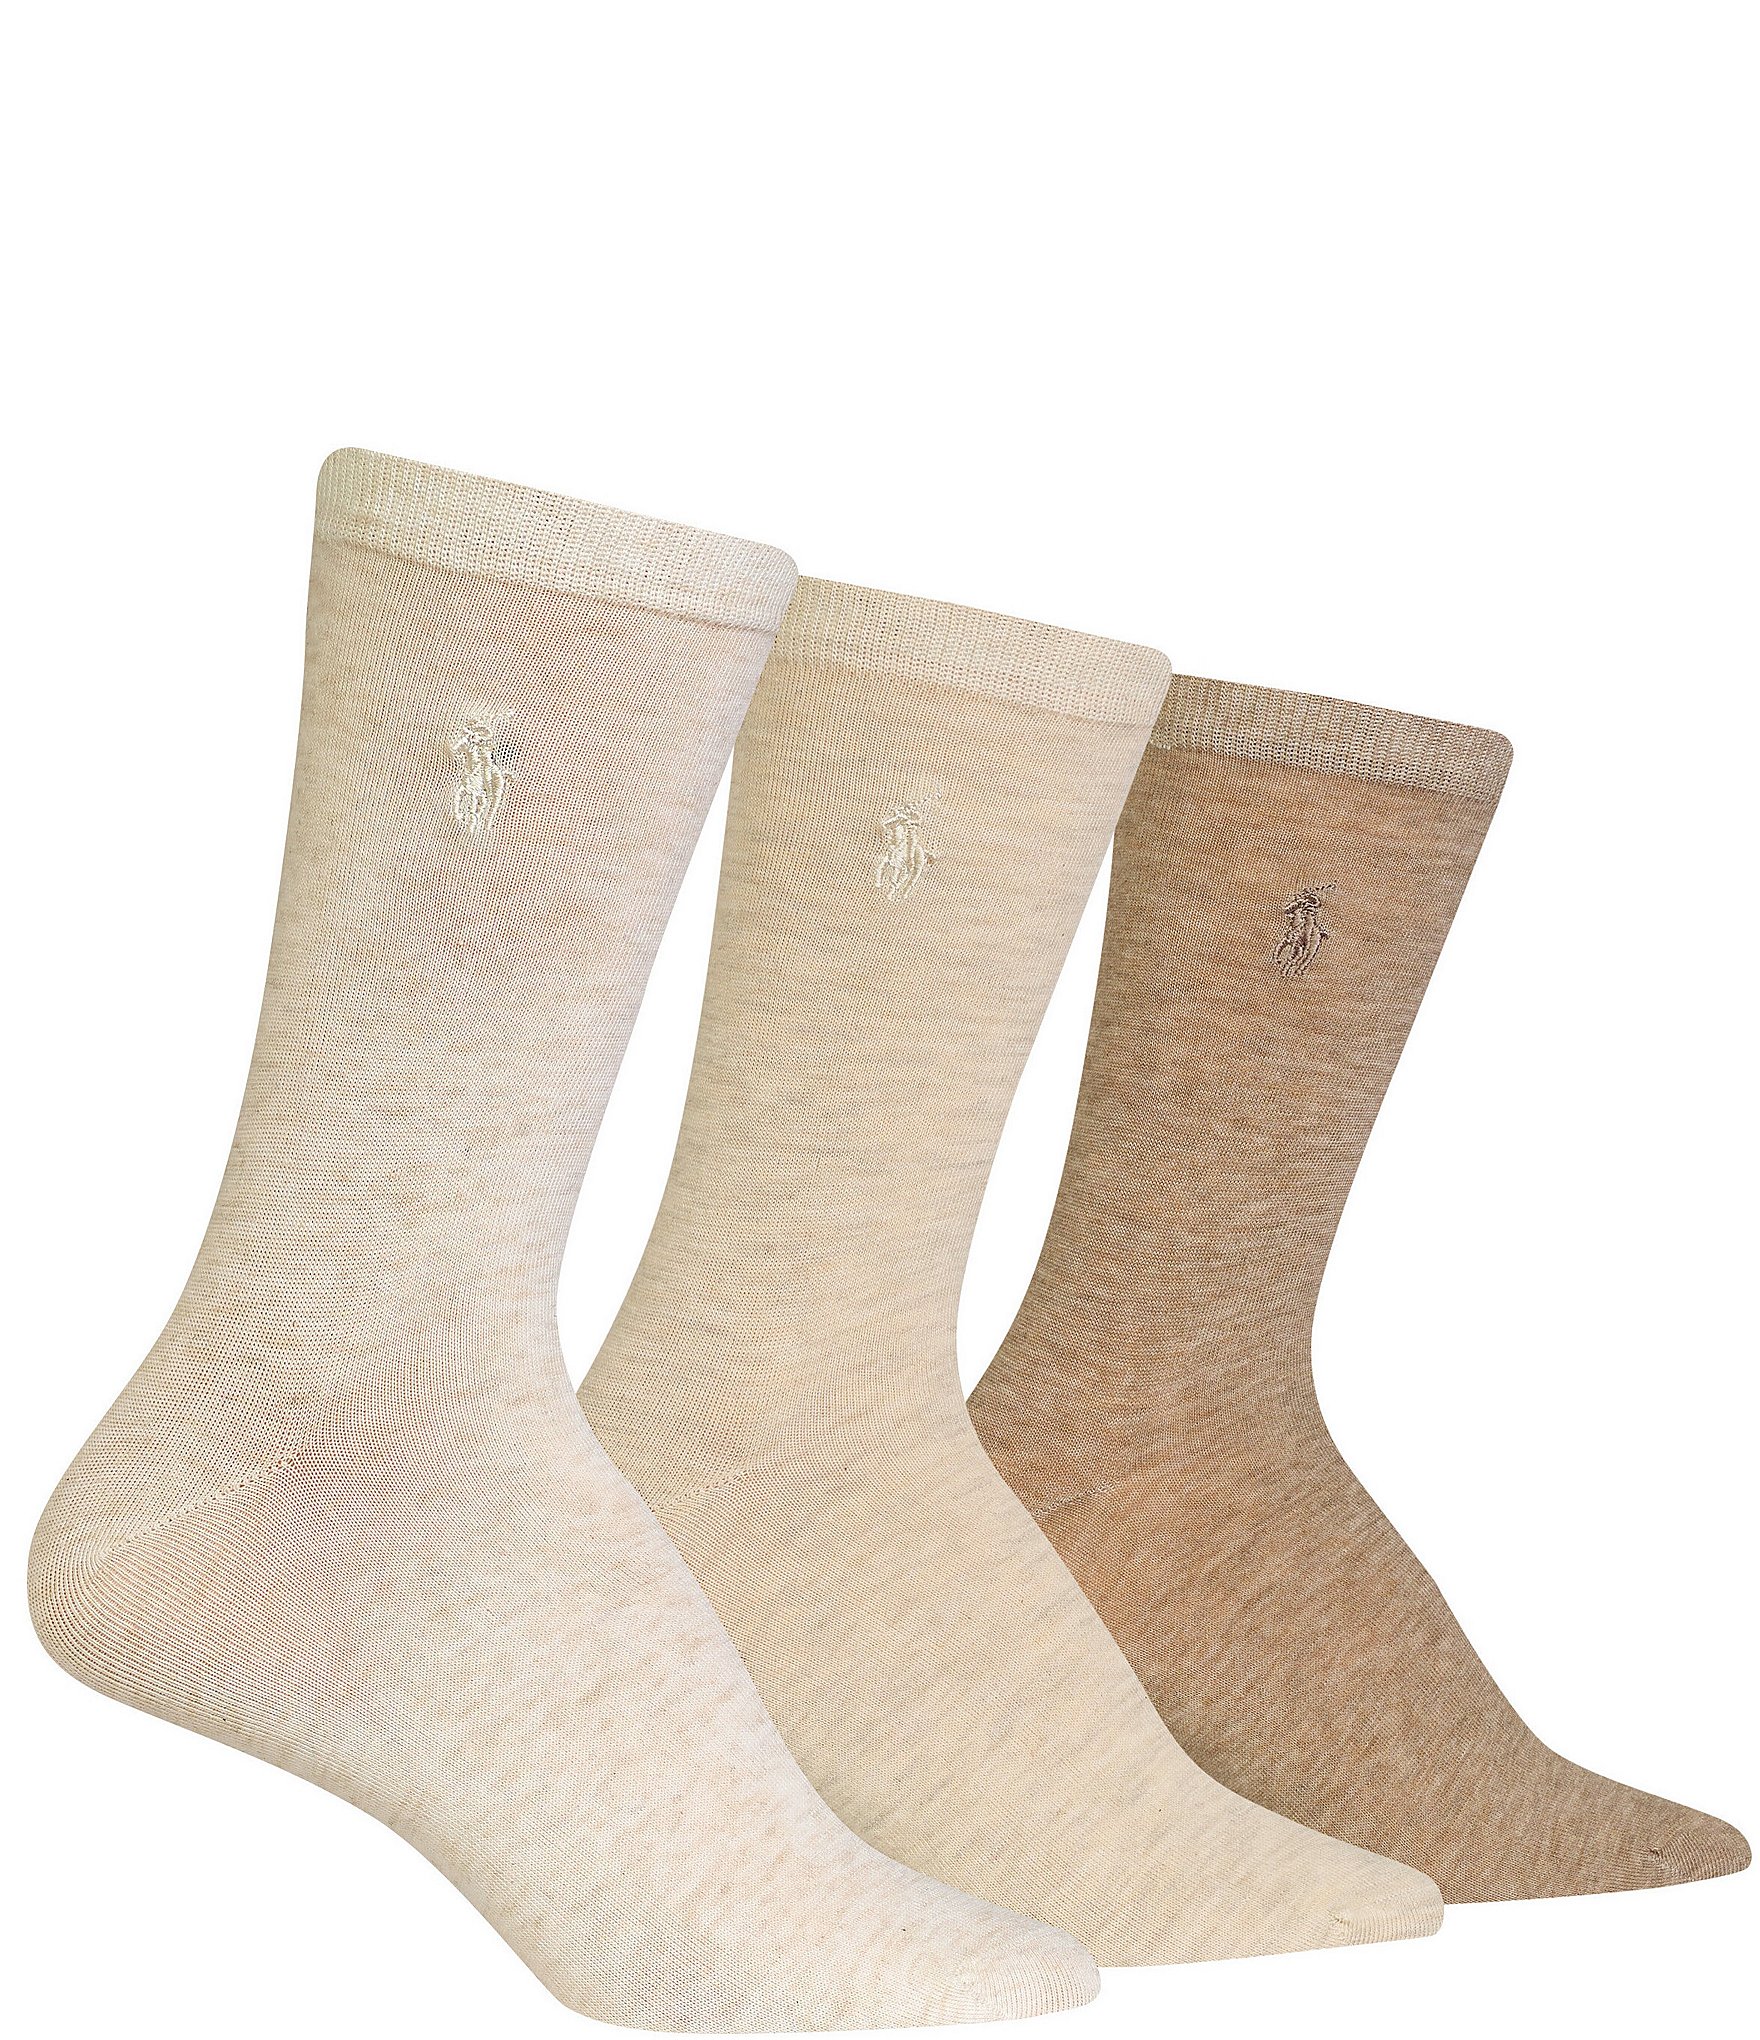 Ladys Trouser Alpaca Wool Socks  Lightweight  comfortable  Warrior  Alpaca Socks